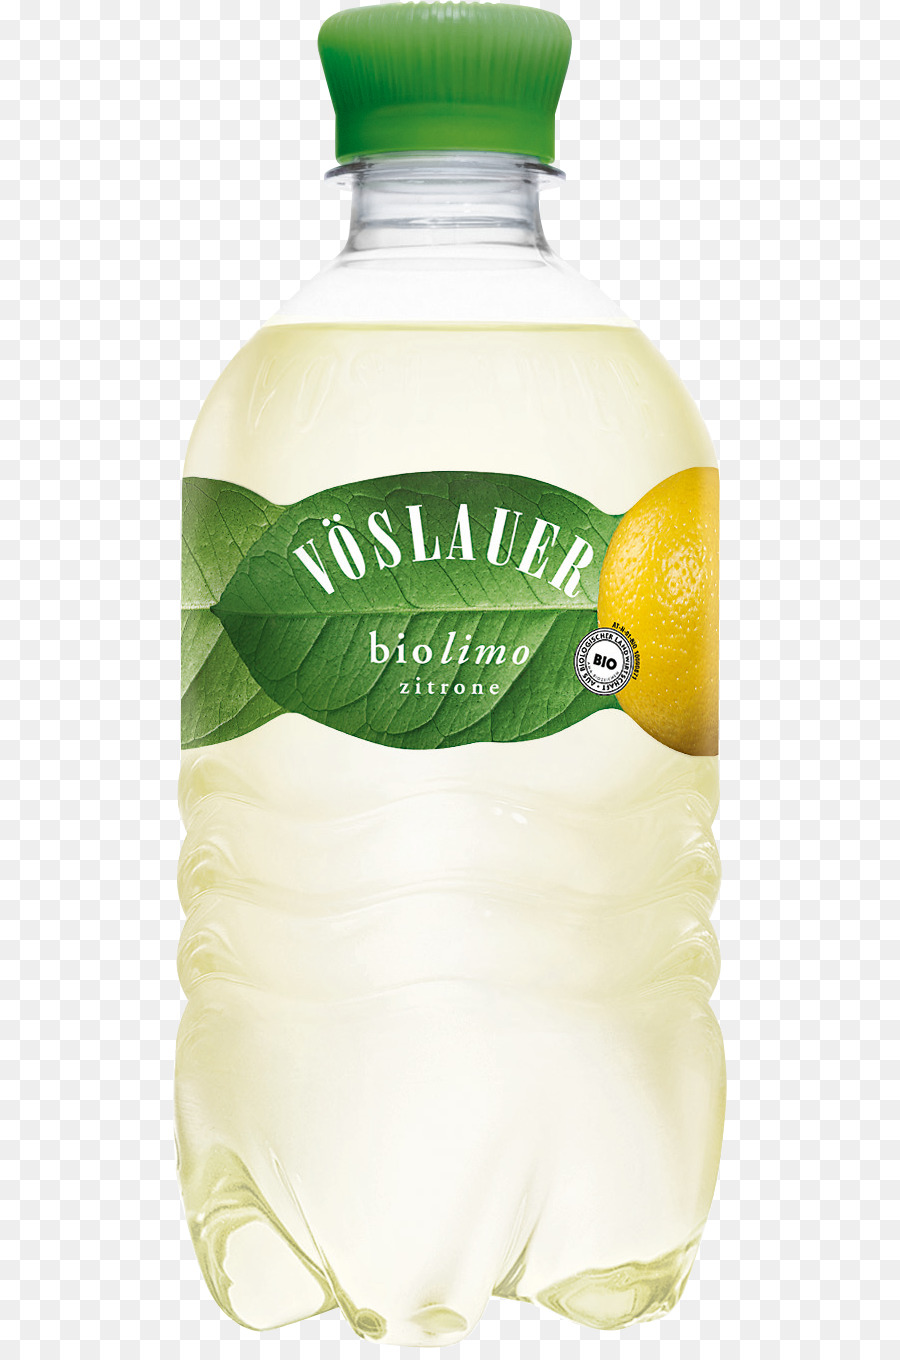 Lemon juice, Zitronensaft, Limette - Saft